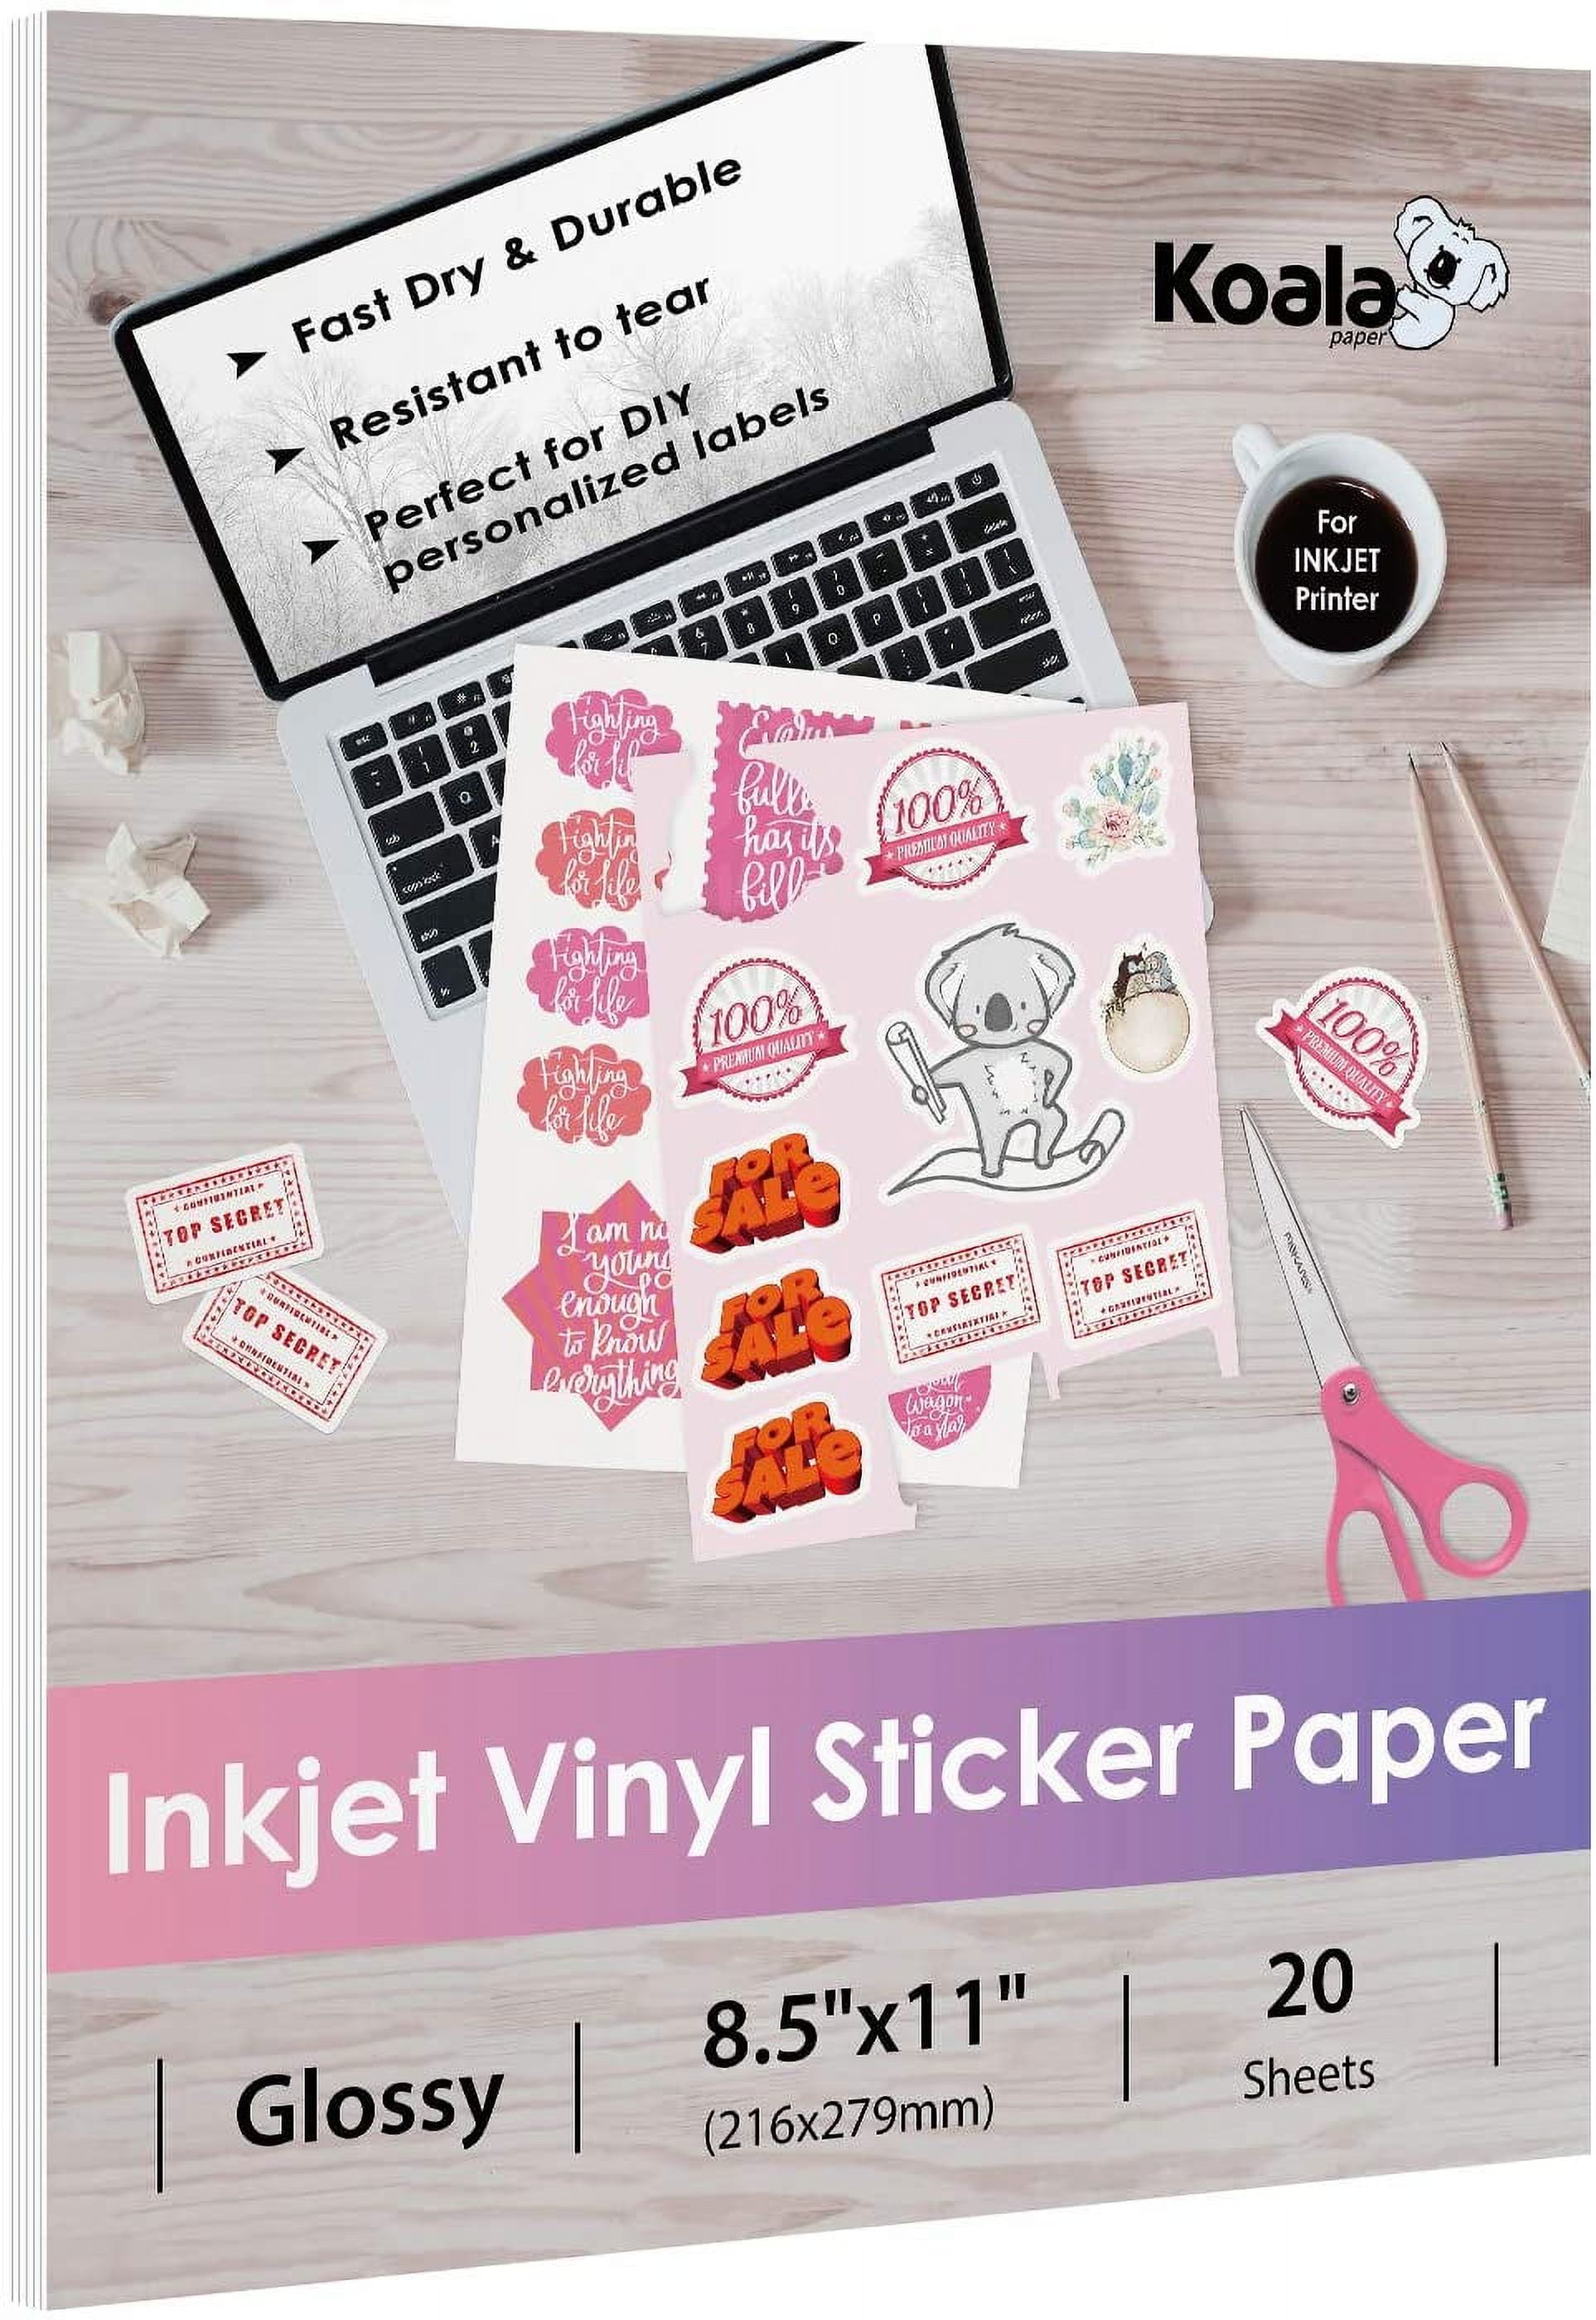 sticker paper - Best Buy